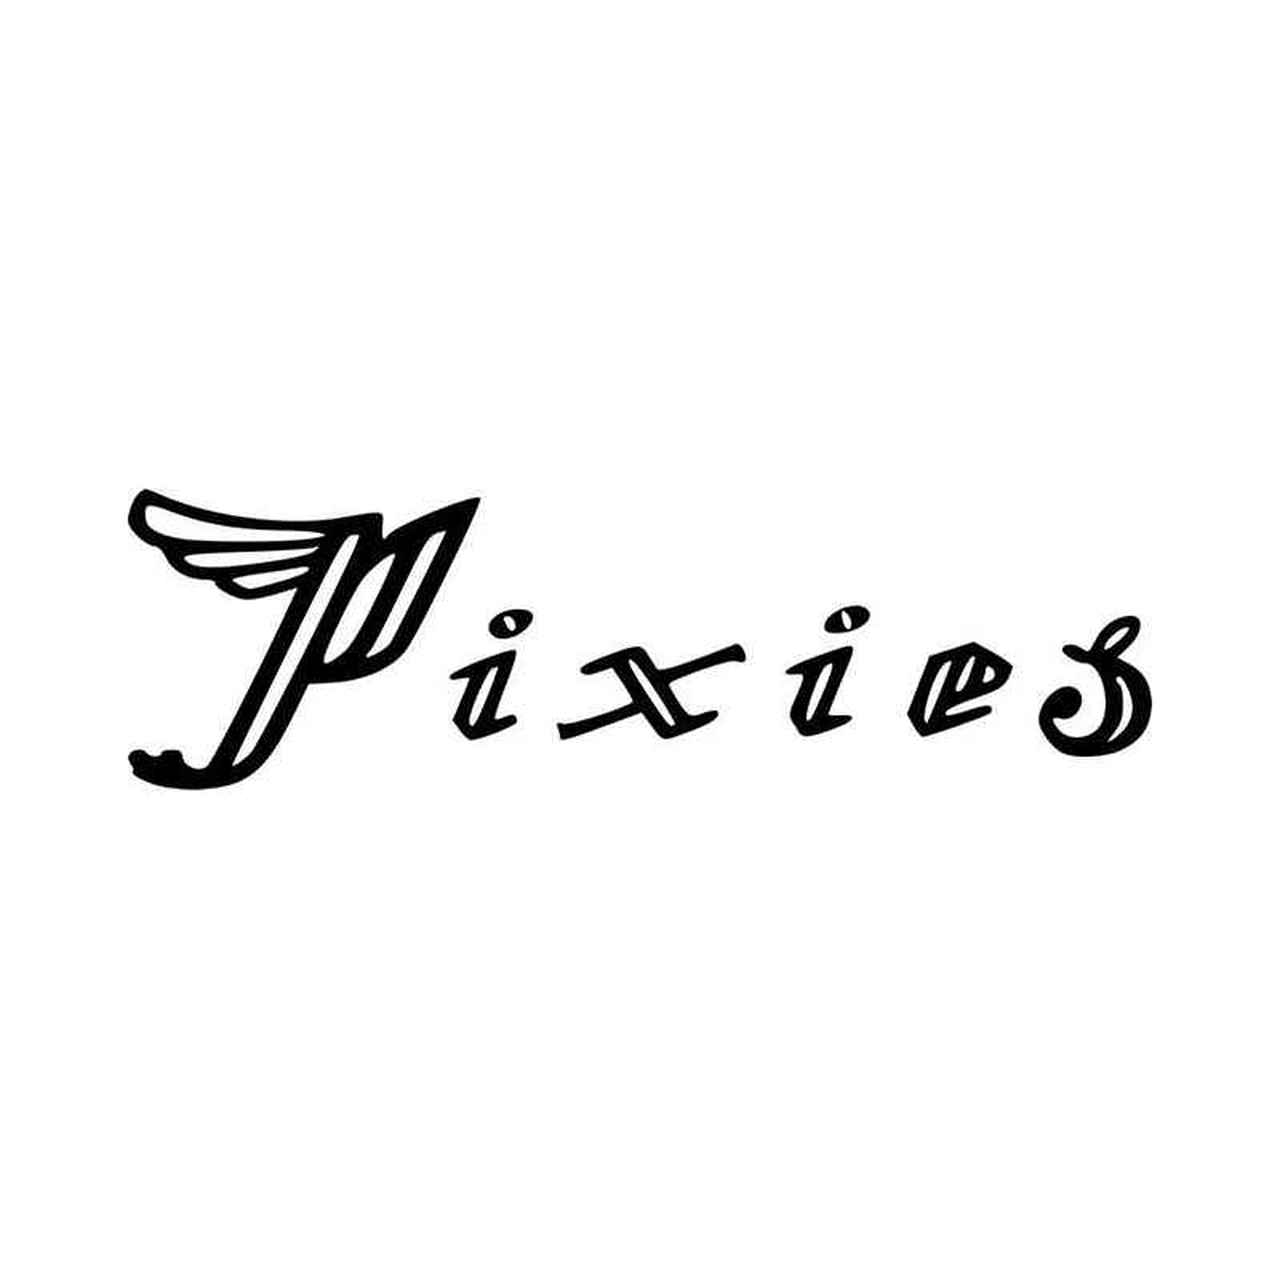 Pixies Logo - The Pixies Band Logo Vinyl Decal Sticker